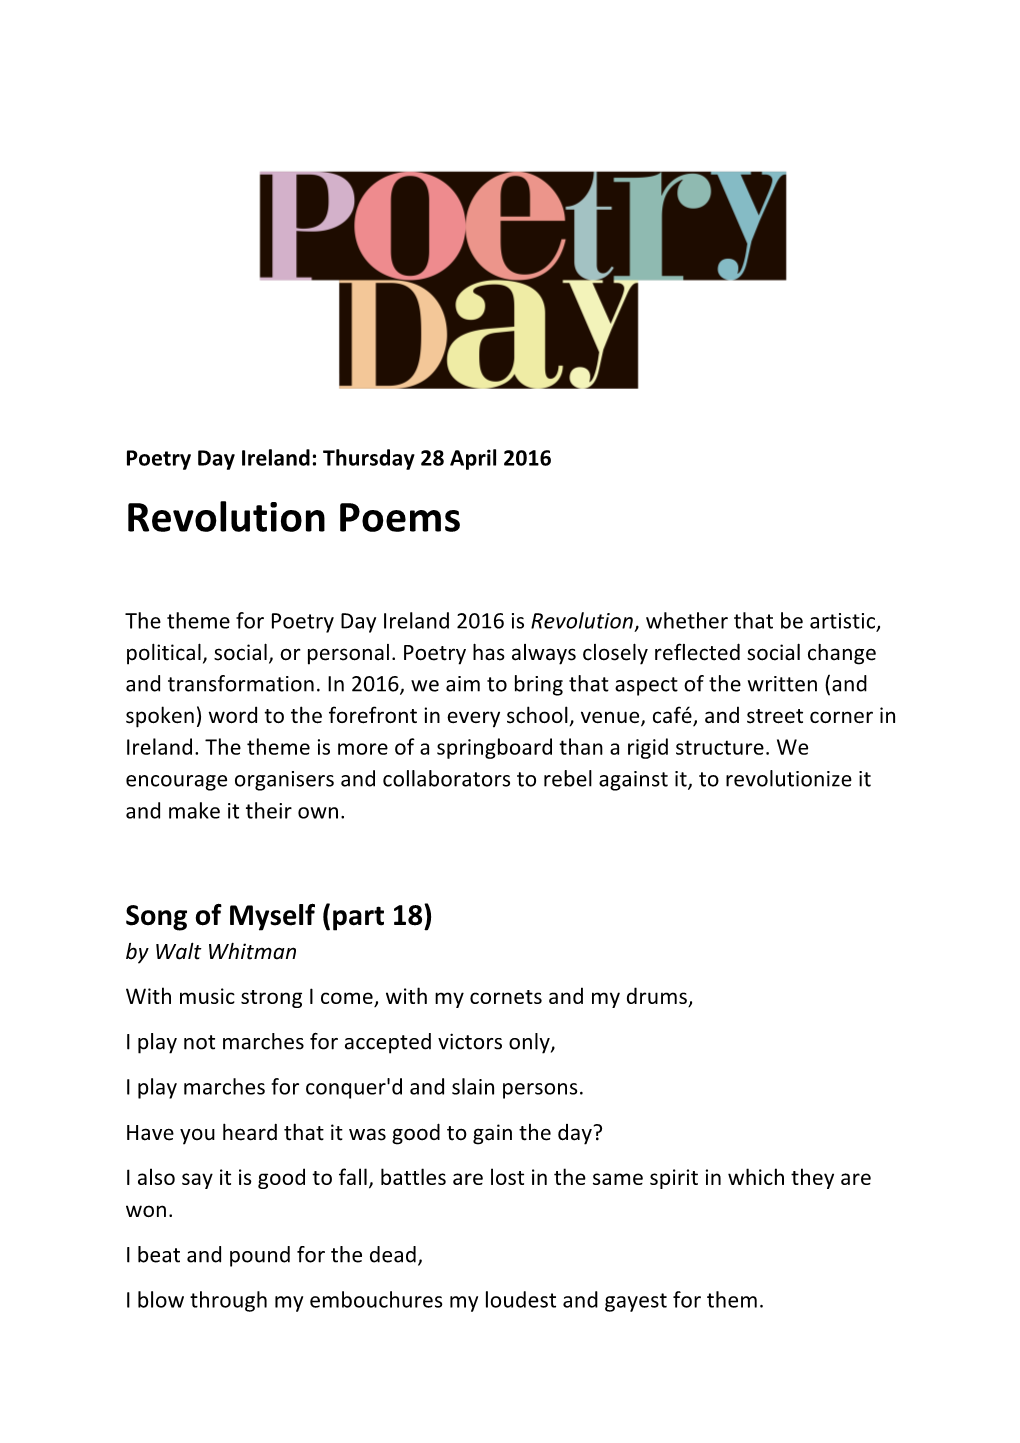 Revolution Poems